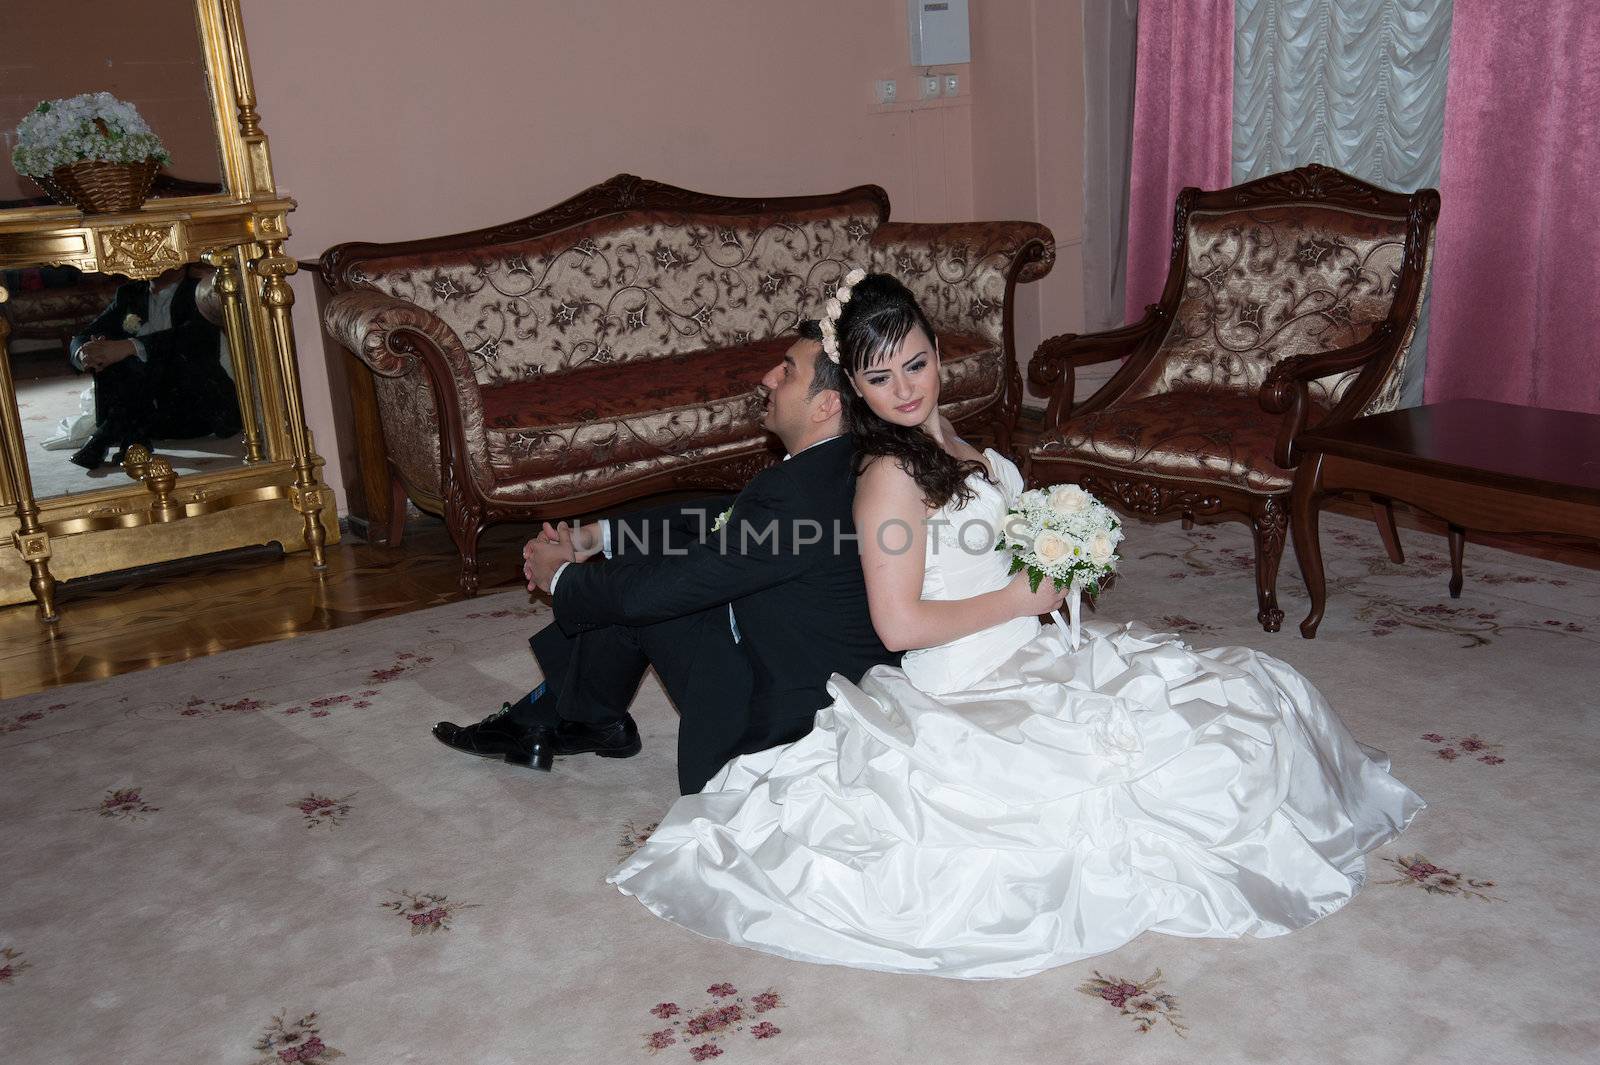 bride and groom by raduga21